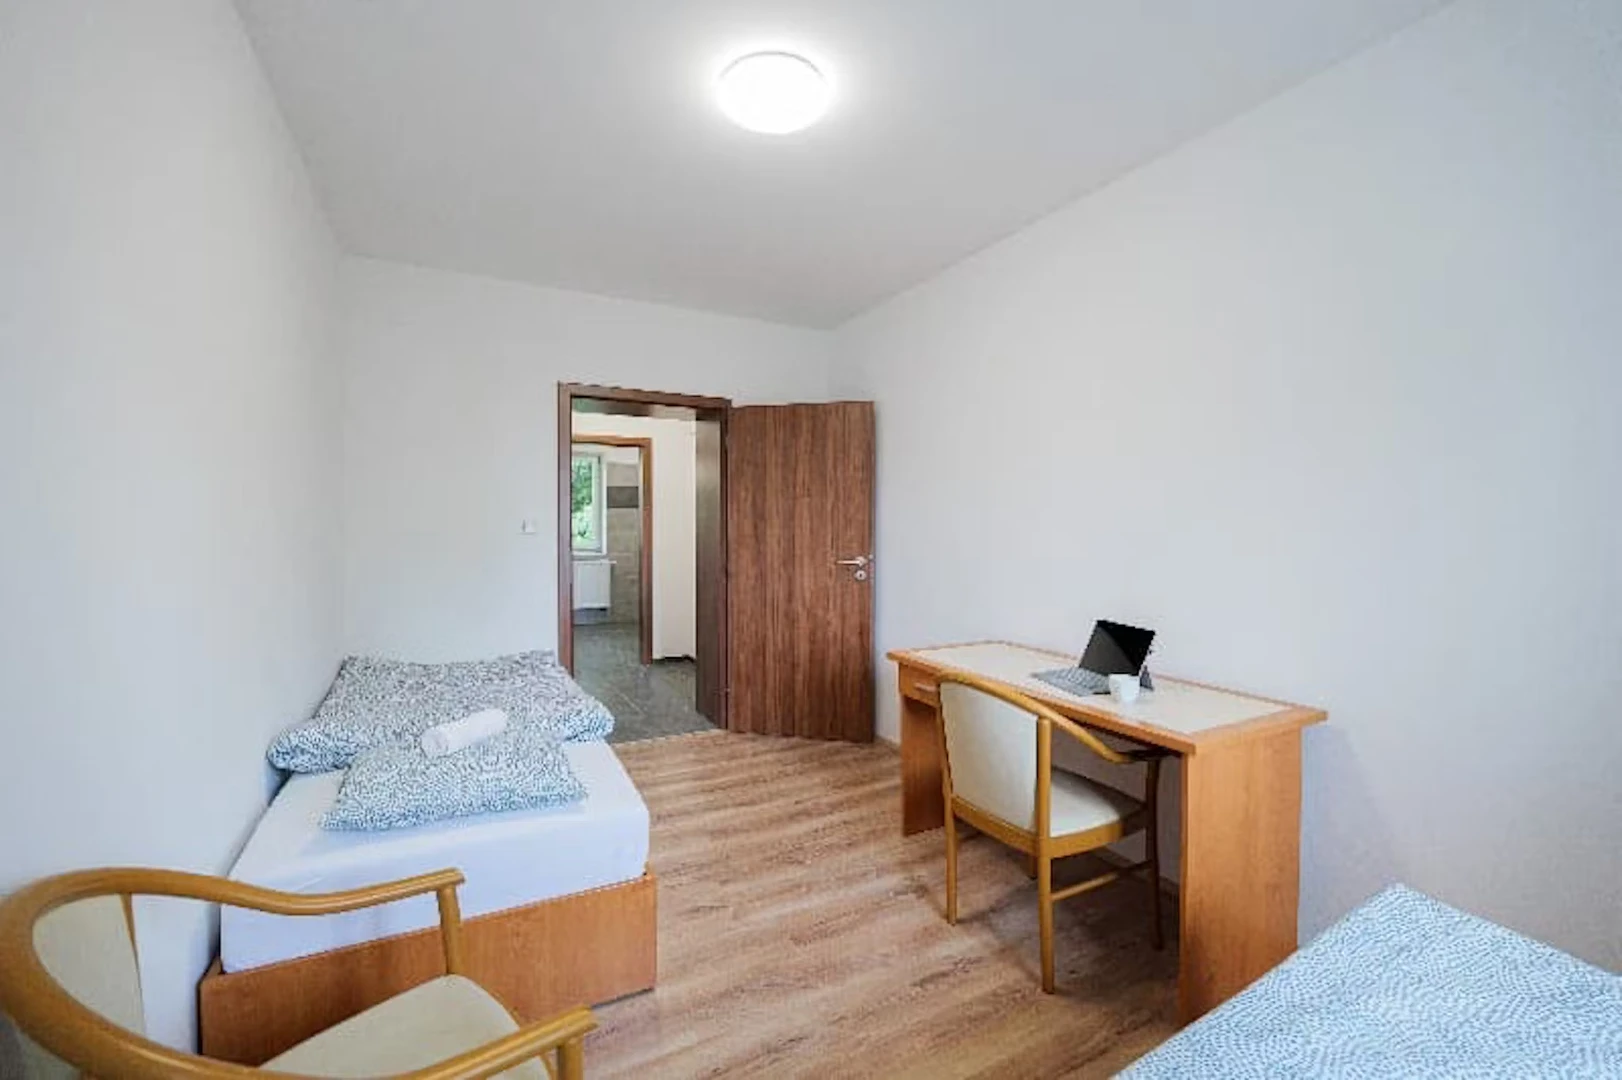 Shared room in 3-bedroom flat Ostrava